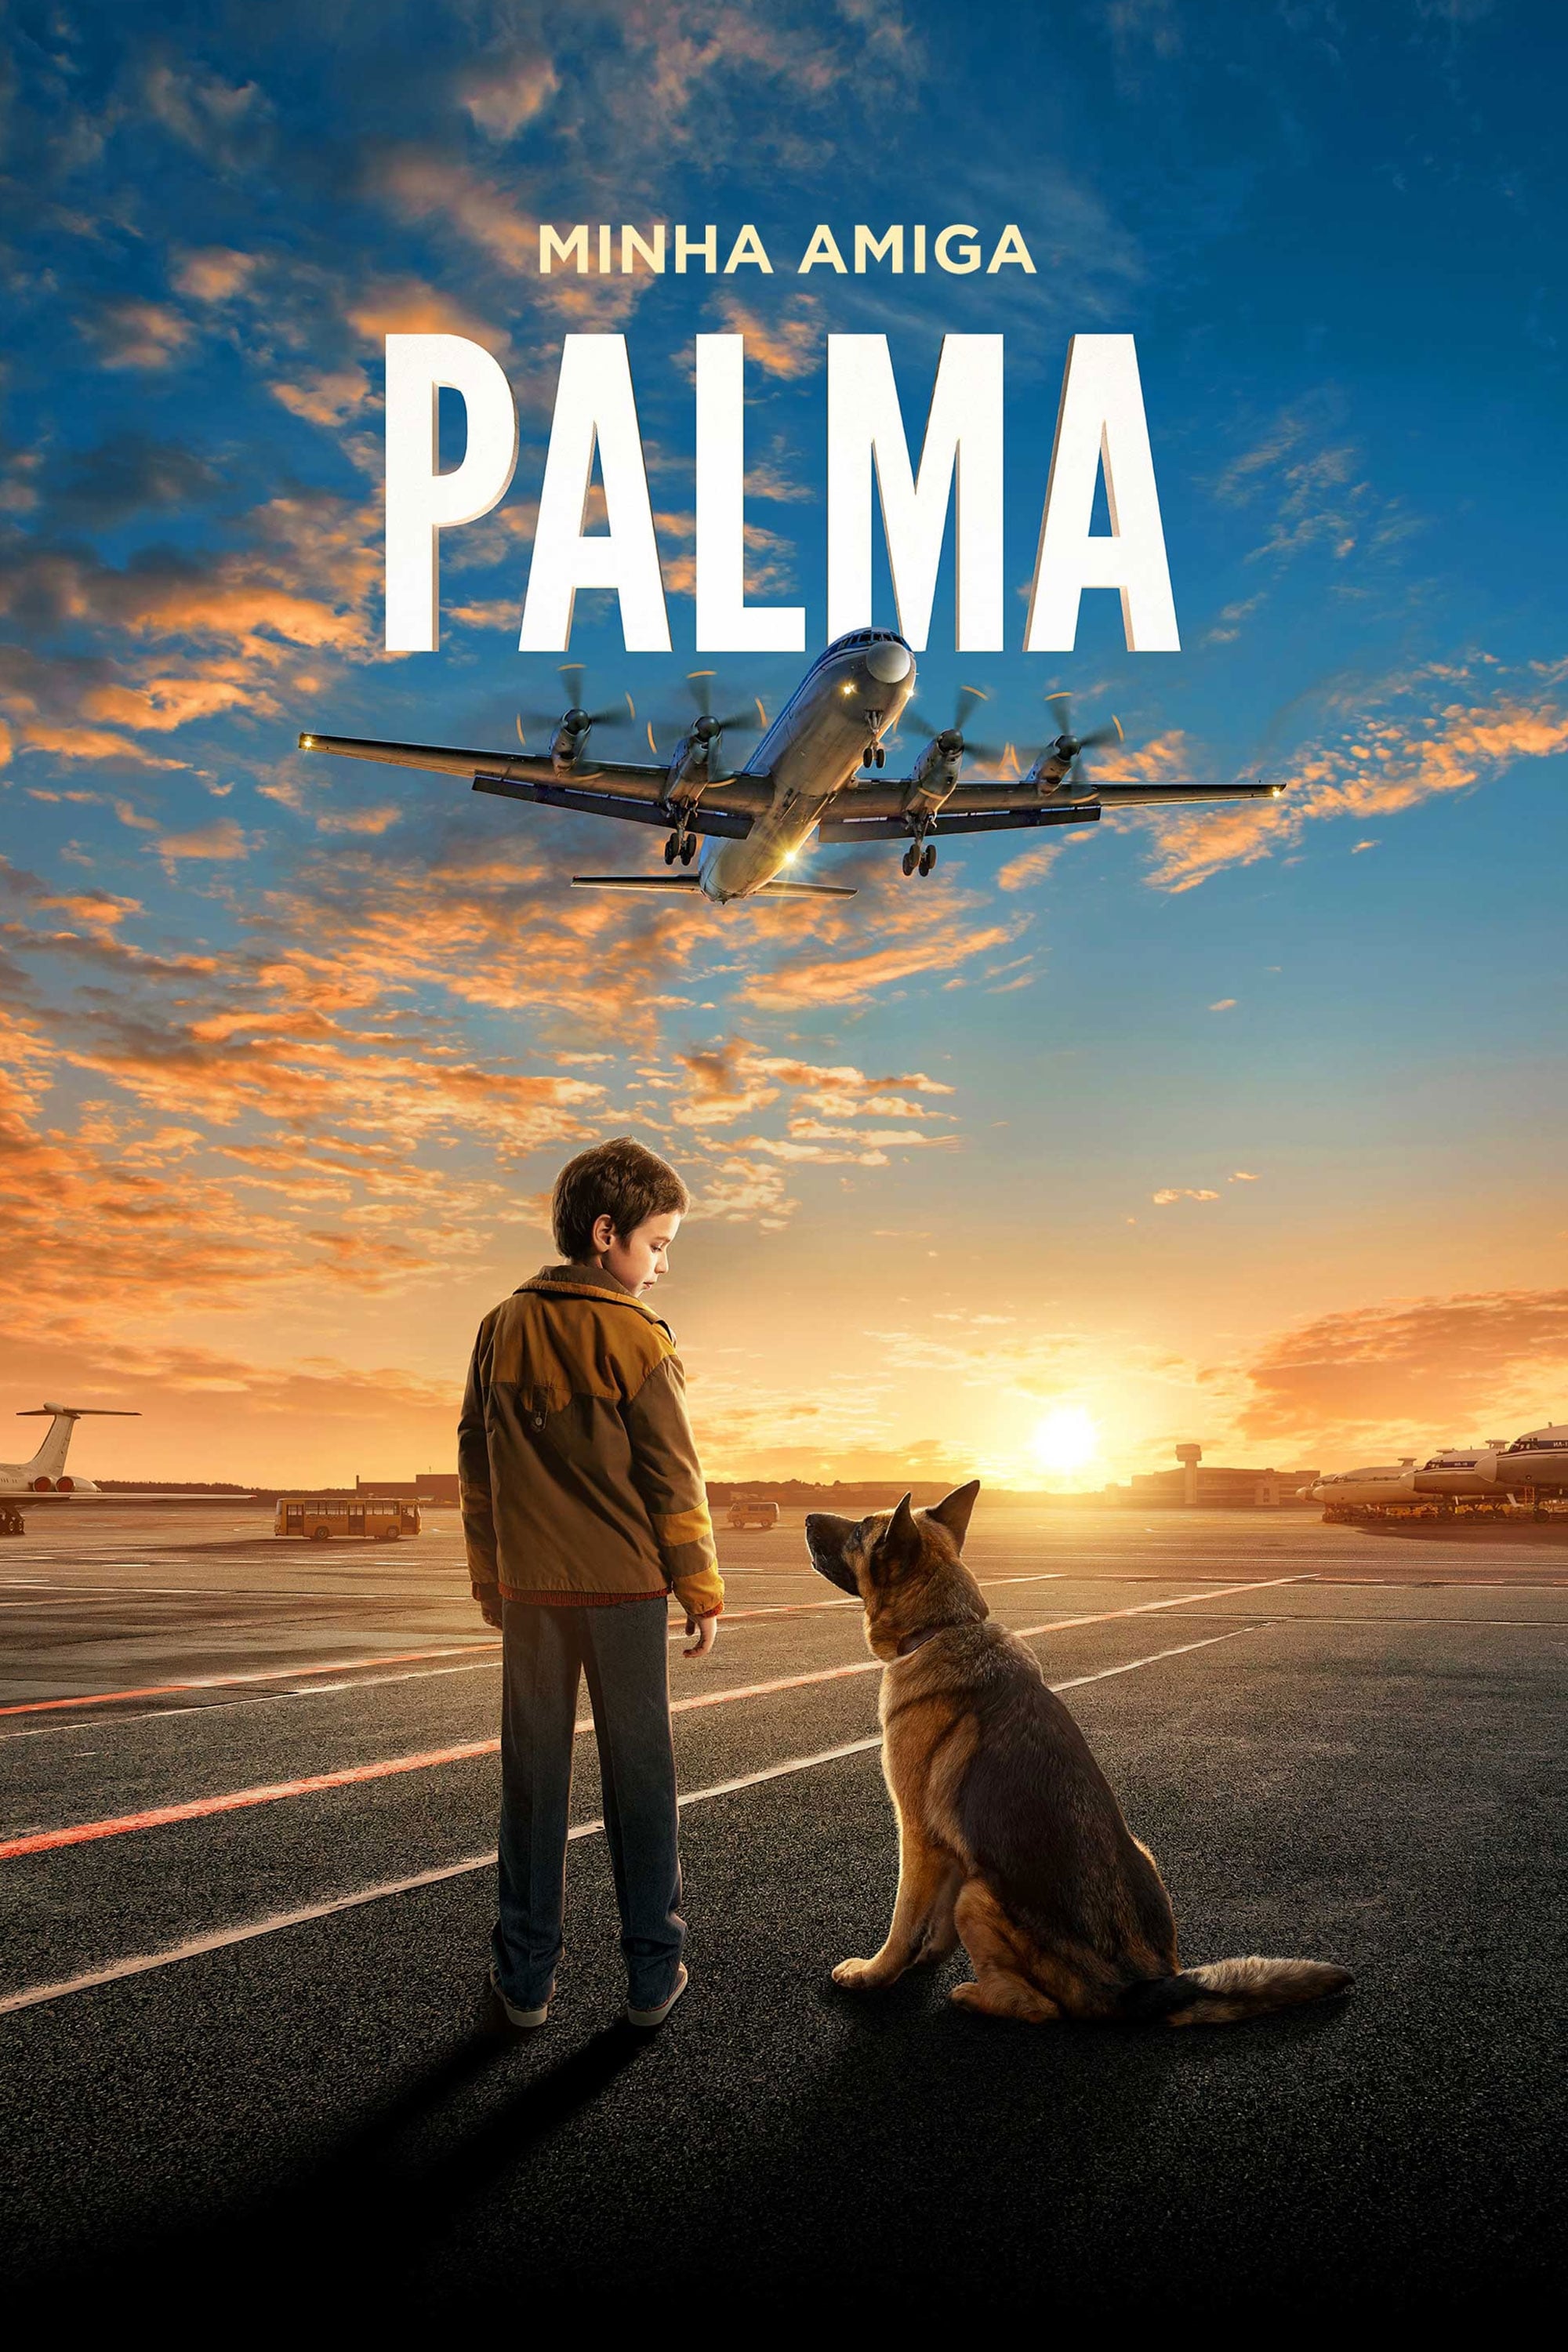 A Dog Named Palma